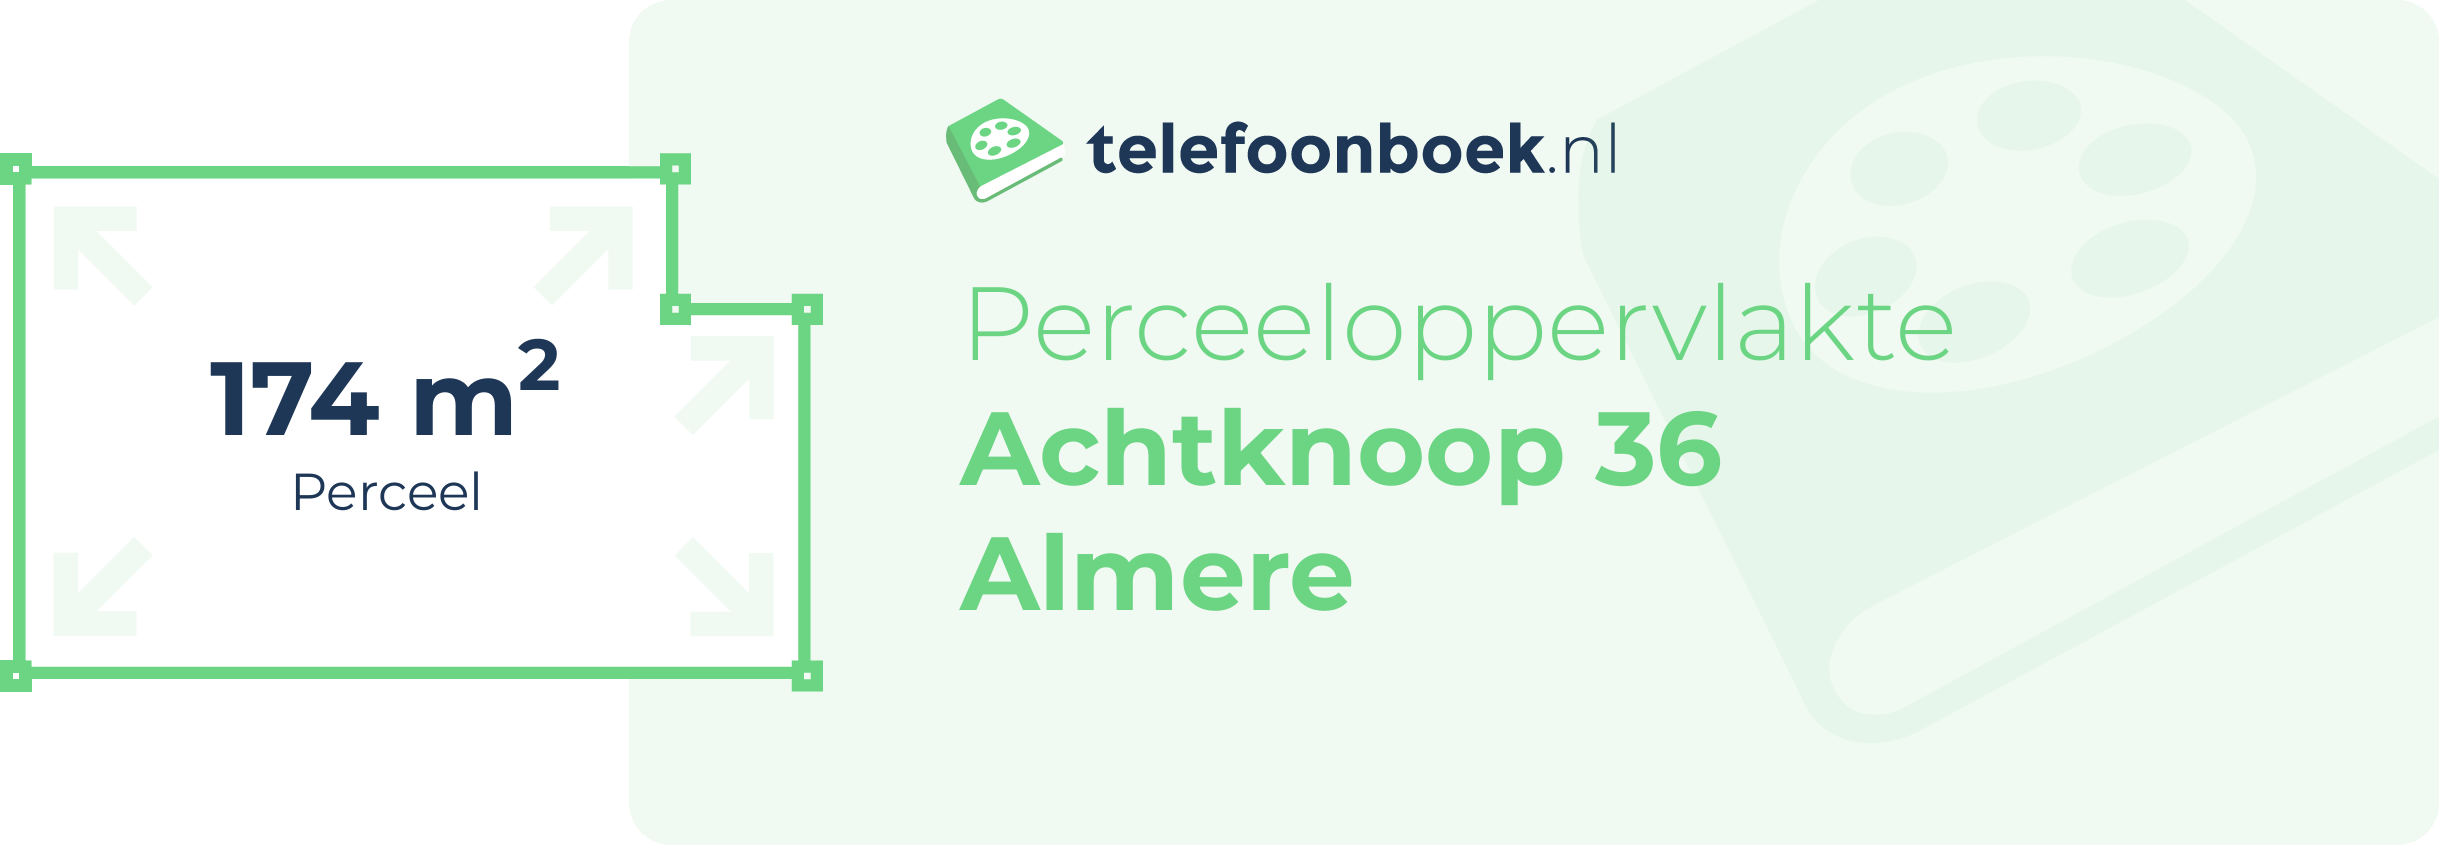 Perceeloppervlakte Achtknoop 36 Almere